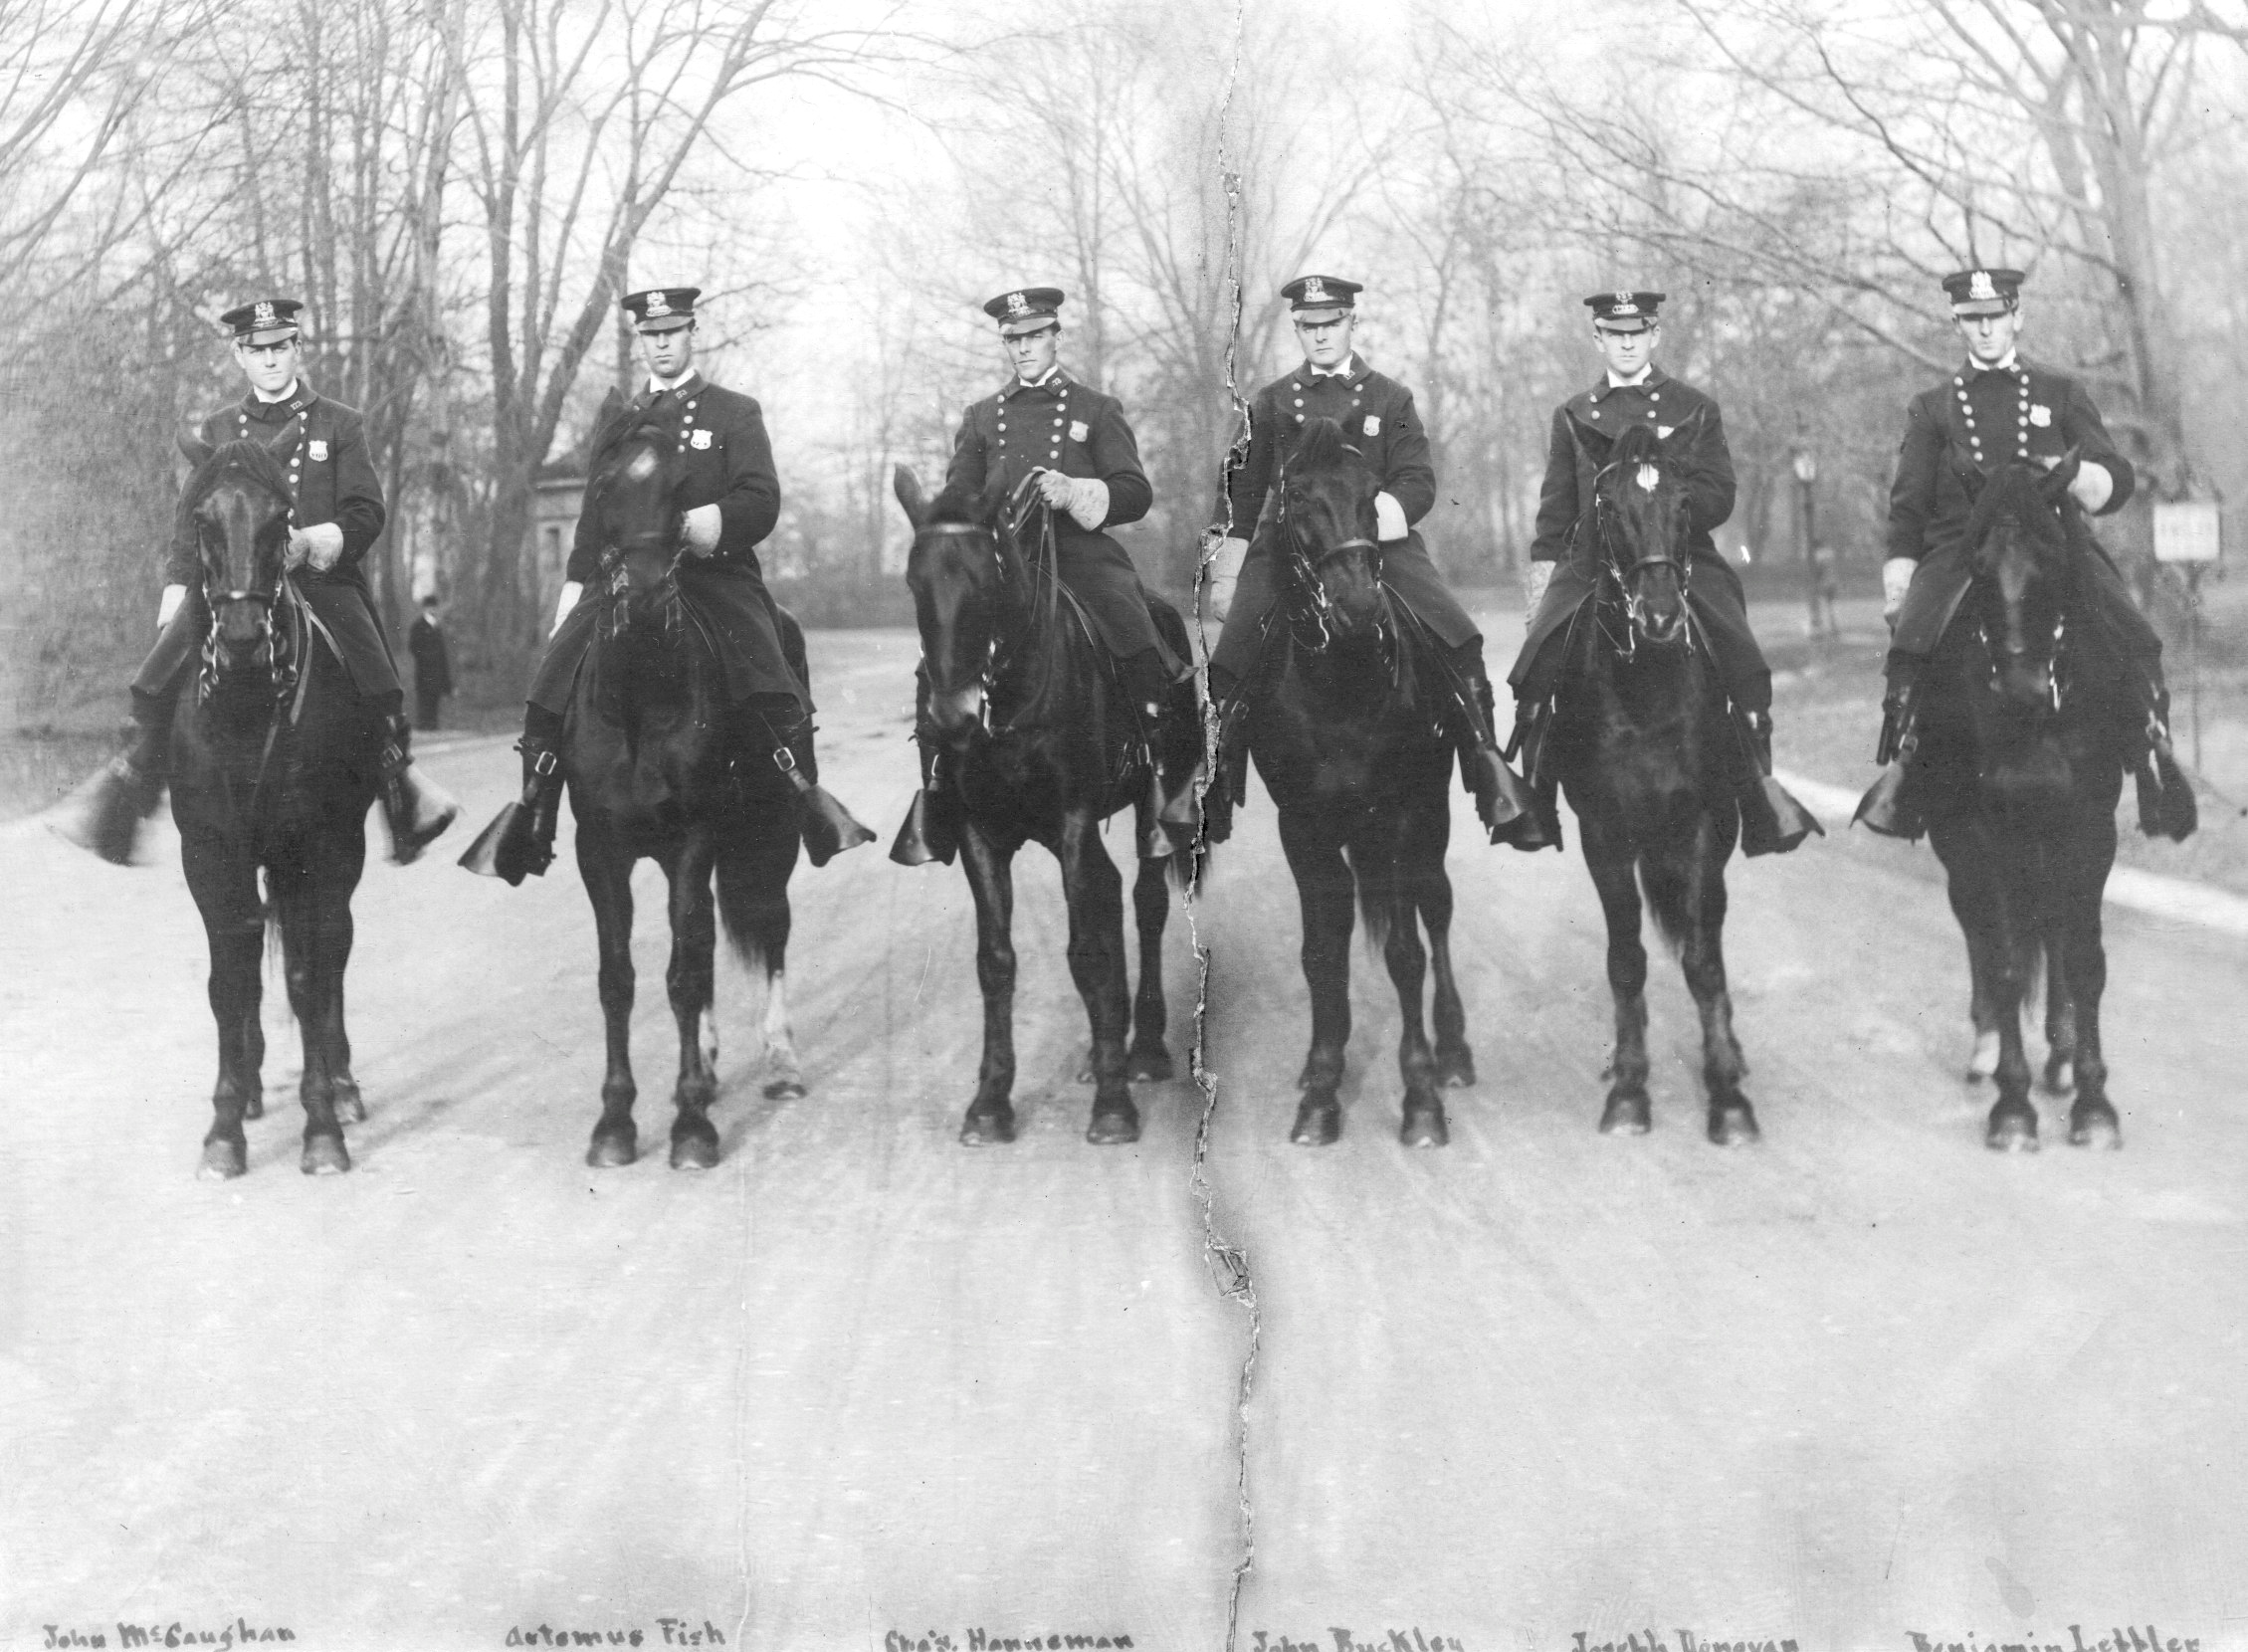 The Mounted Patrolman of Prospect Park, about 1908:  John S.E. McCaughan, Artemas Fish, Charles Hanneman, John Buckley, Joseph Donovan, Benjamin Leppler.